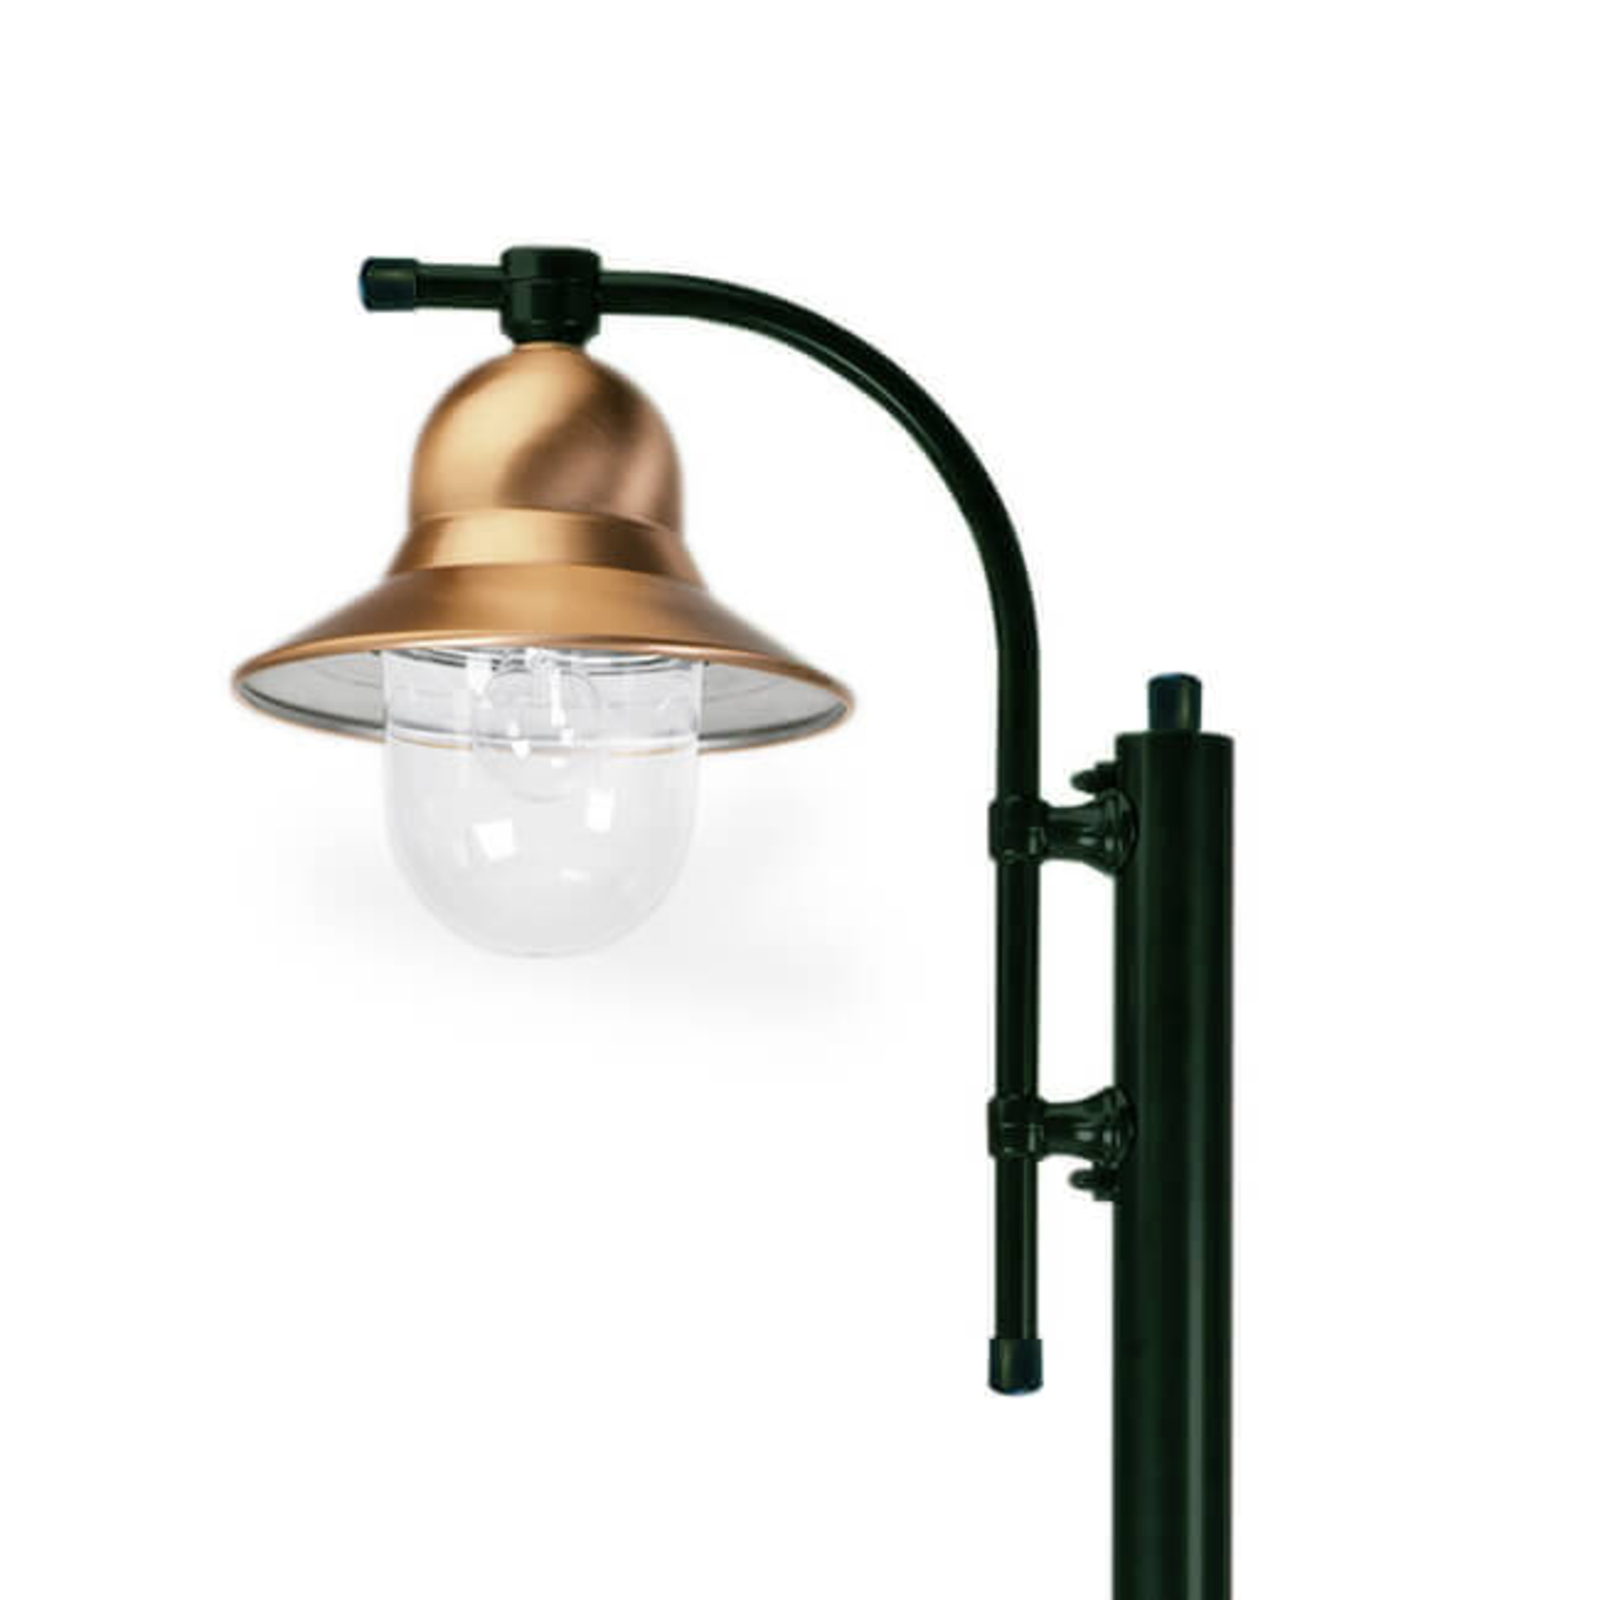 1-lamp lantaarnpaal Toscane 240 cm, groen